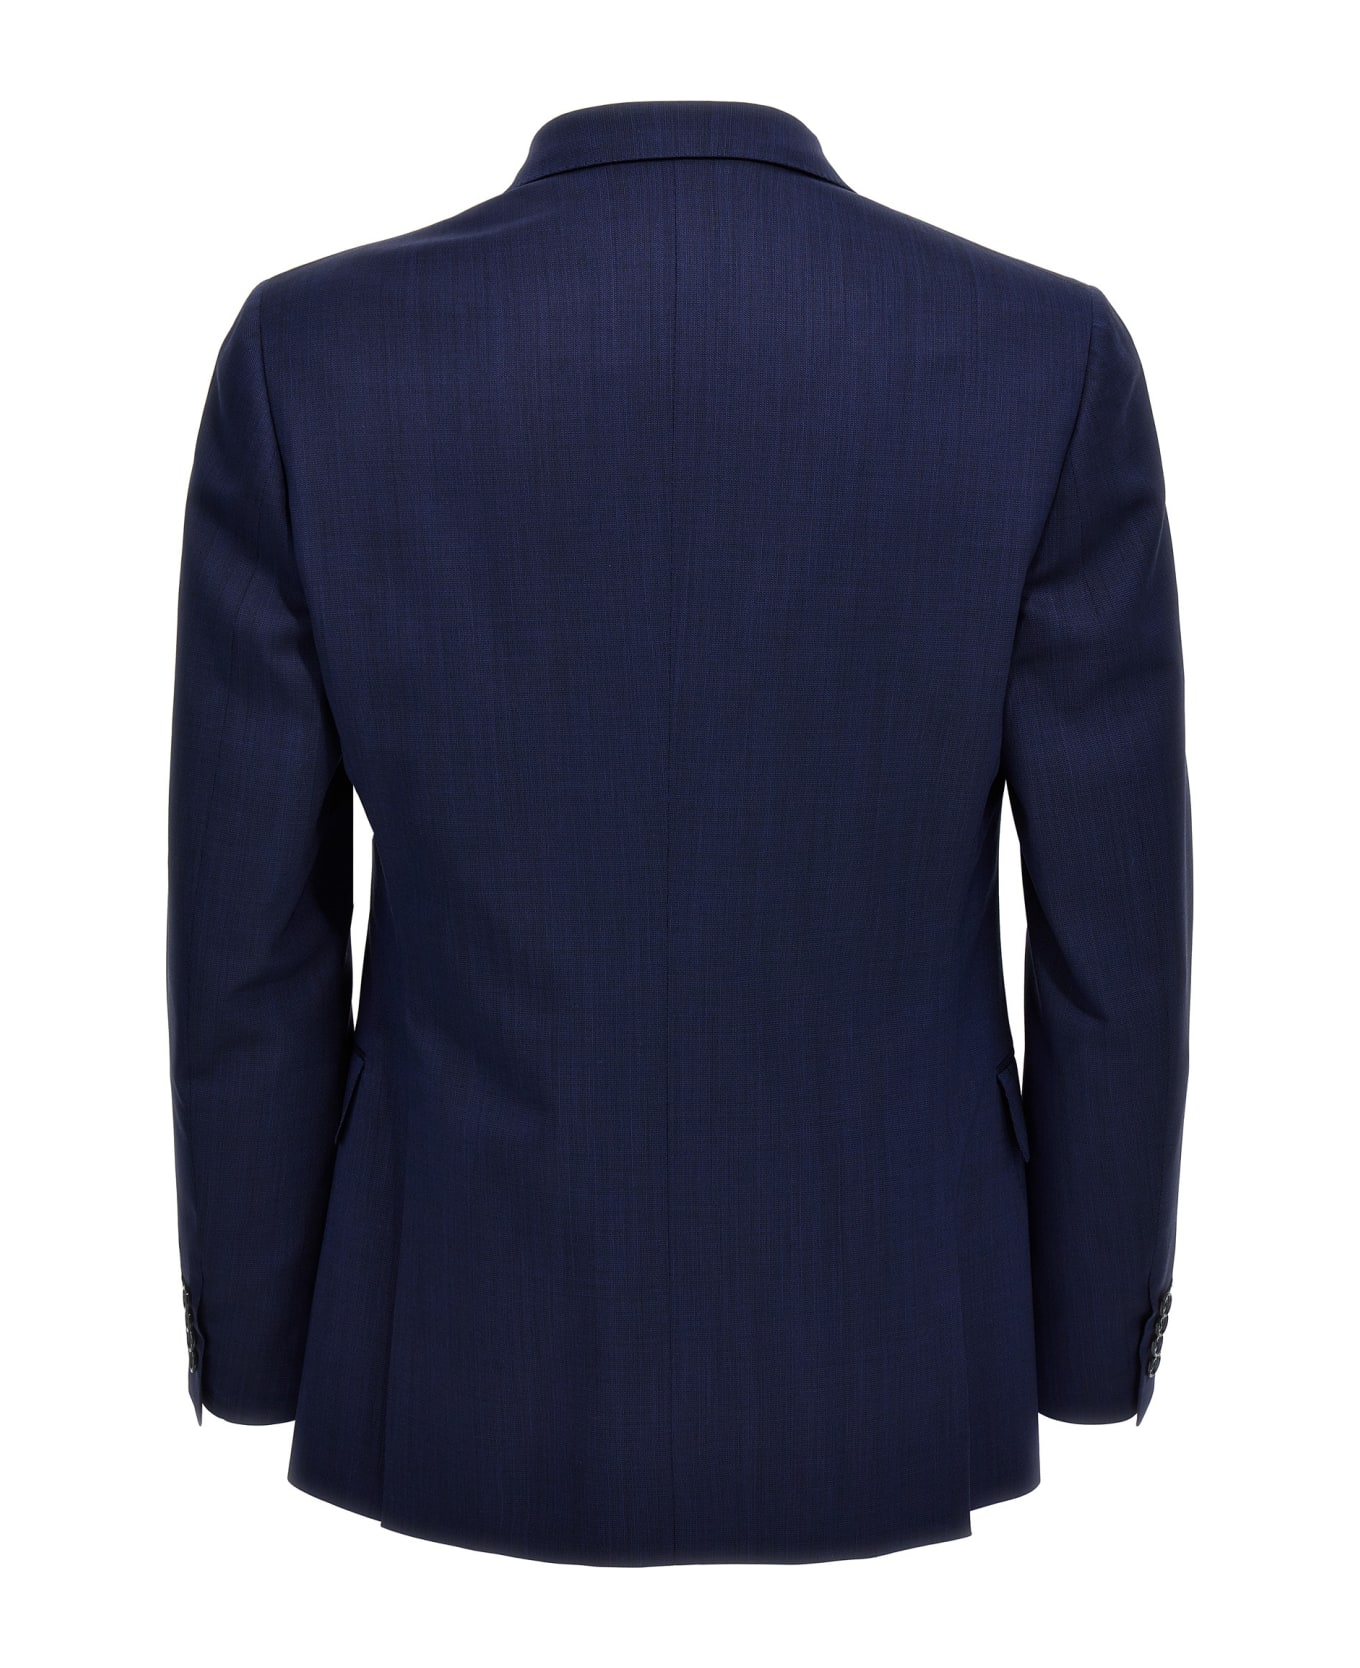 Brioni 'trevi' Suit - Blue スーツ